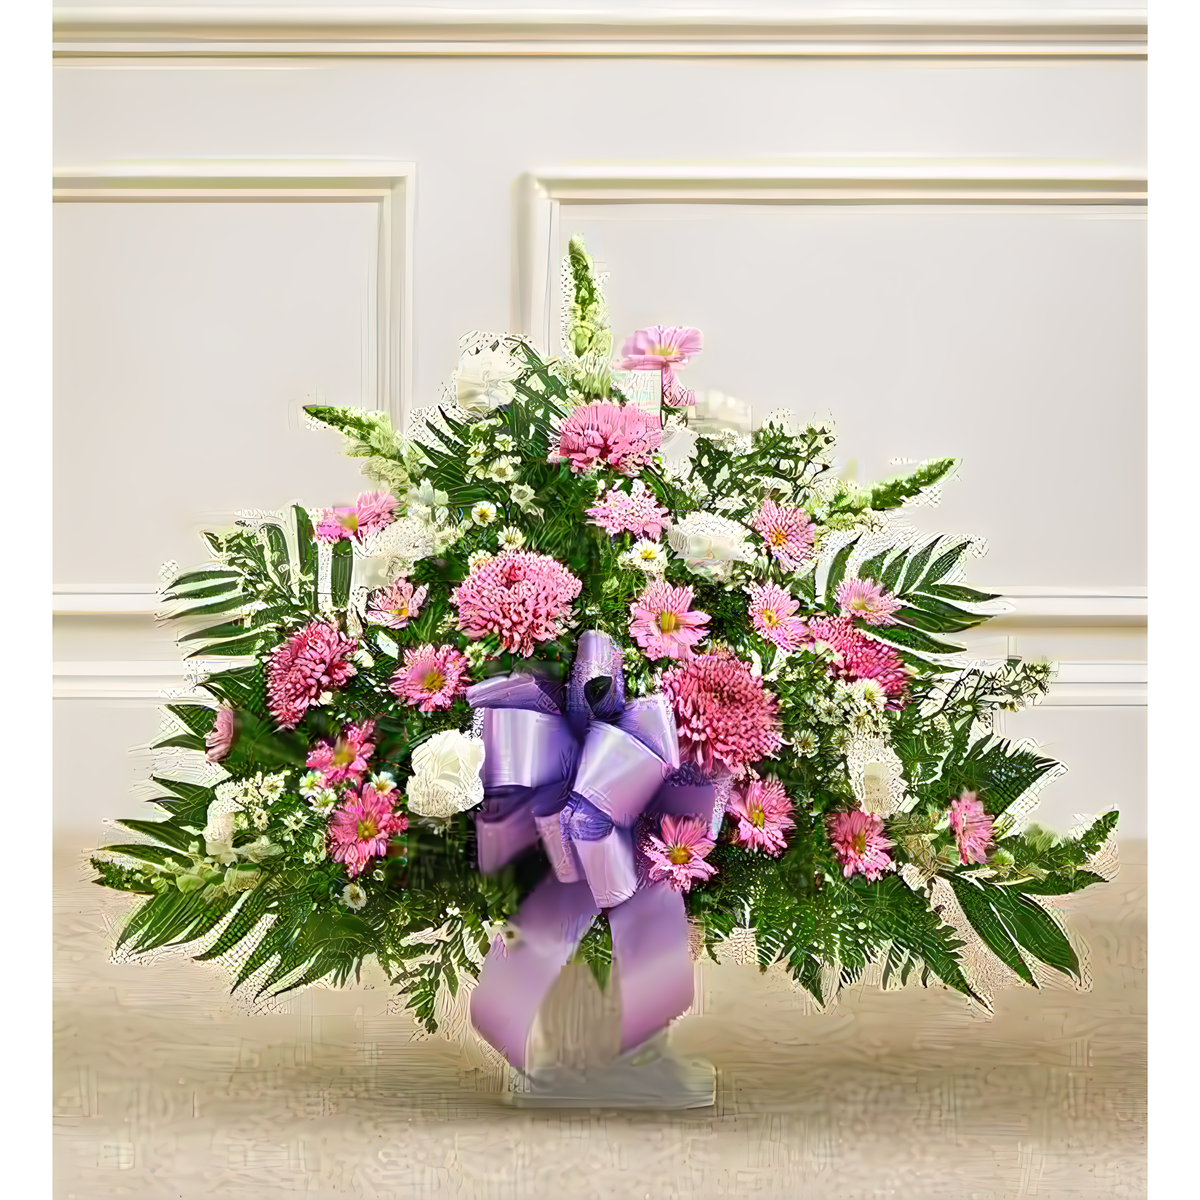 Manhattan Flower Delivery - Tribute Lavender &amp; White Floor Basket Arrangement - Funeral &gt; For the Service